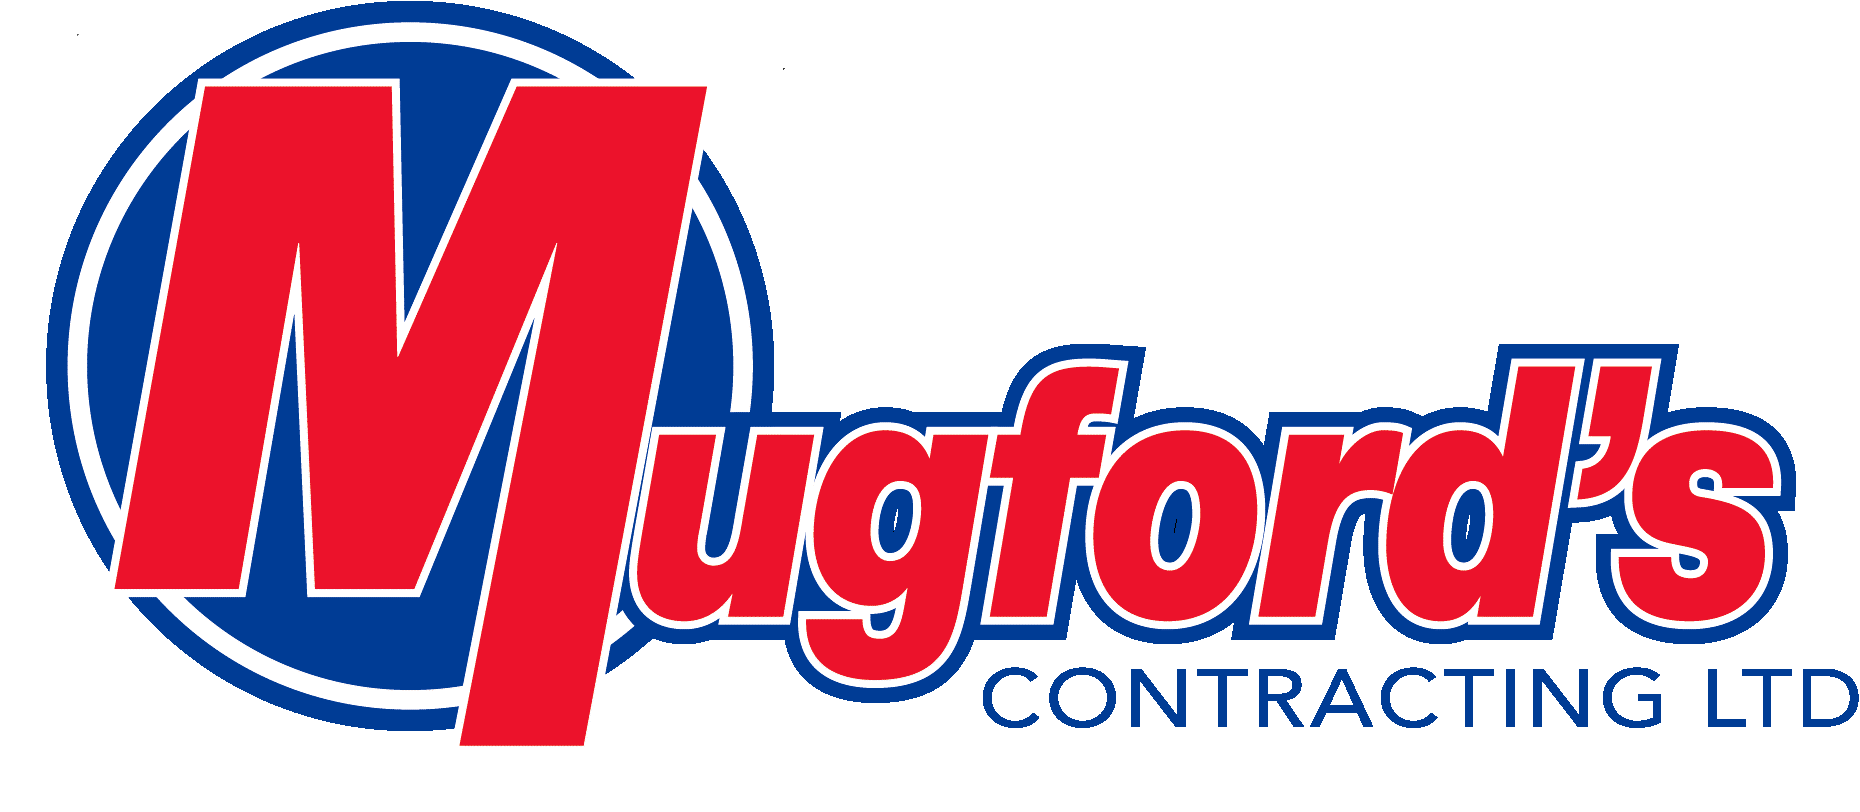 Mugford's Contracting Ltd. Logo